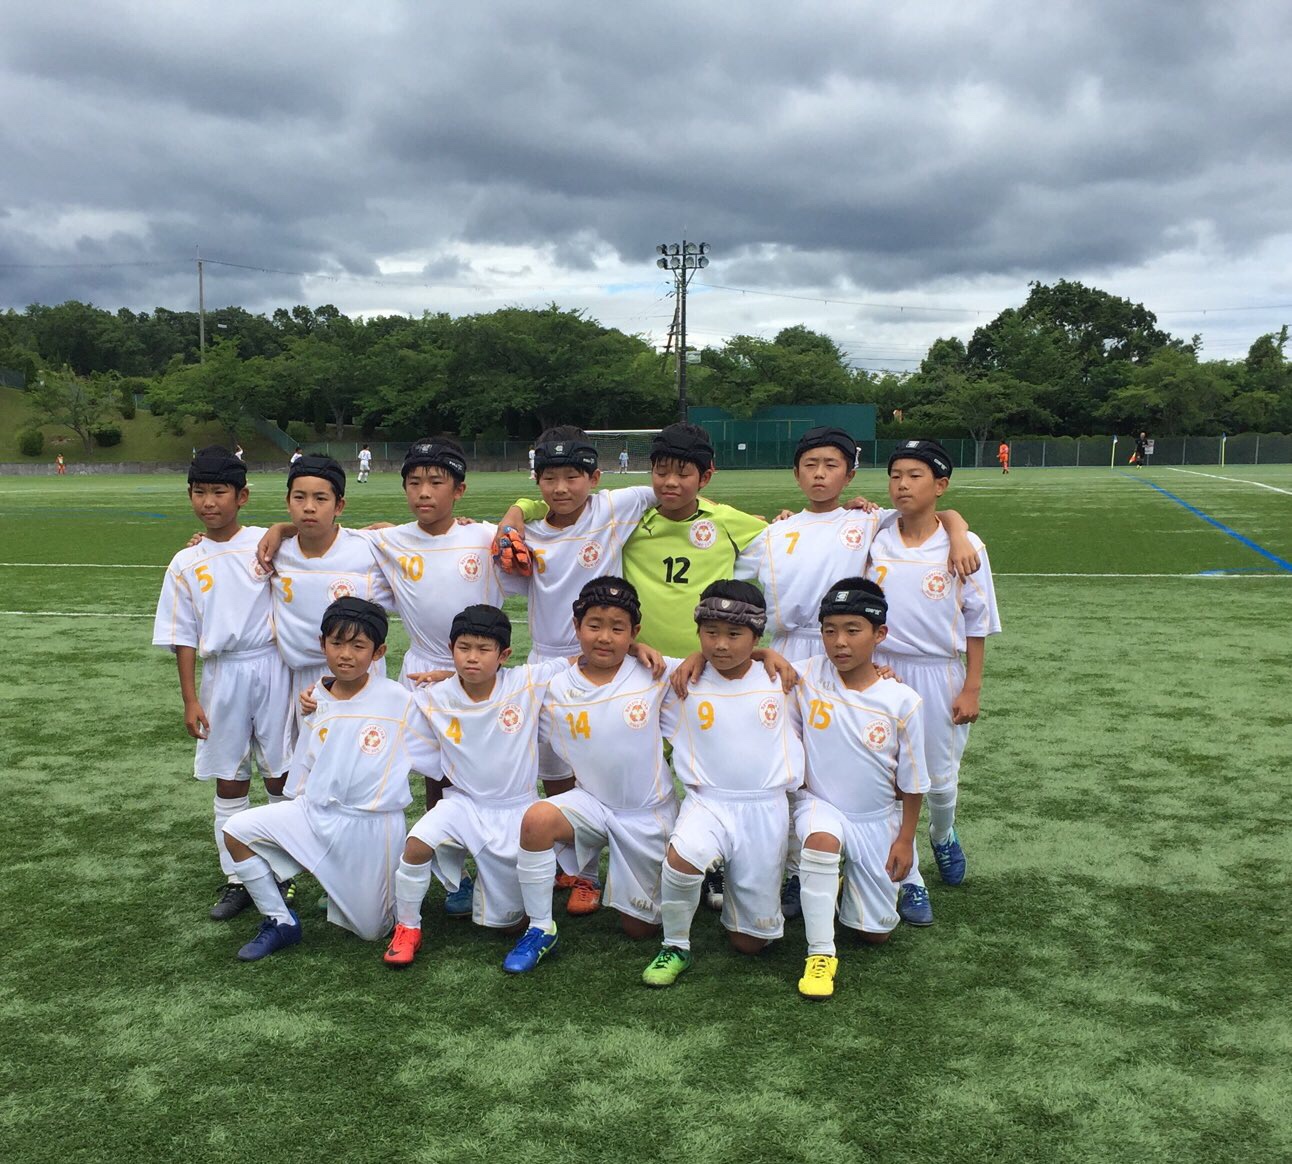 Kinshoカップ奈良県小学生サッカー大会2回戦 劇的な逆転勝利 ドリームファクトリー 夢をつくる